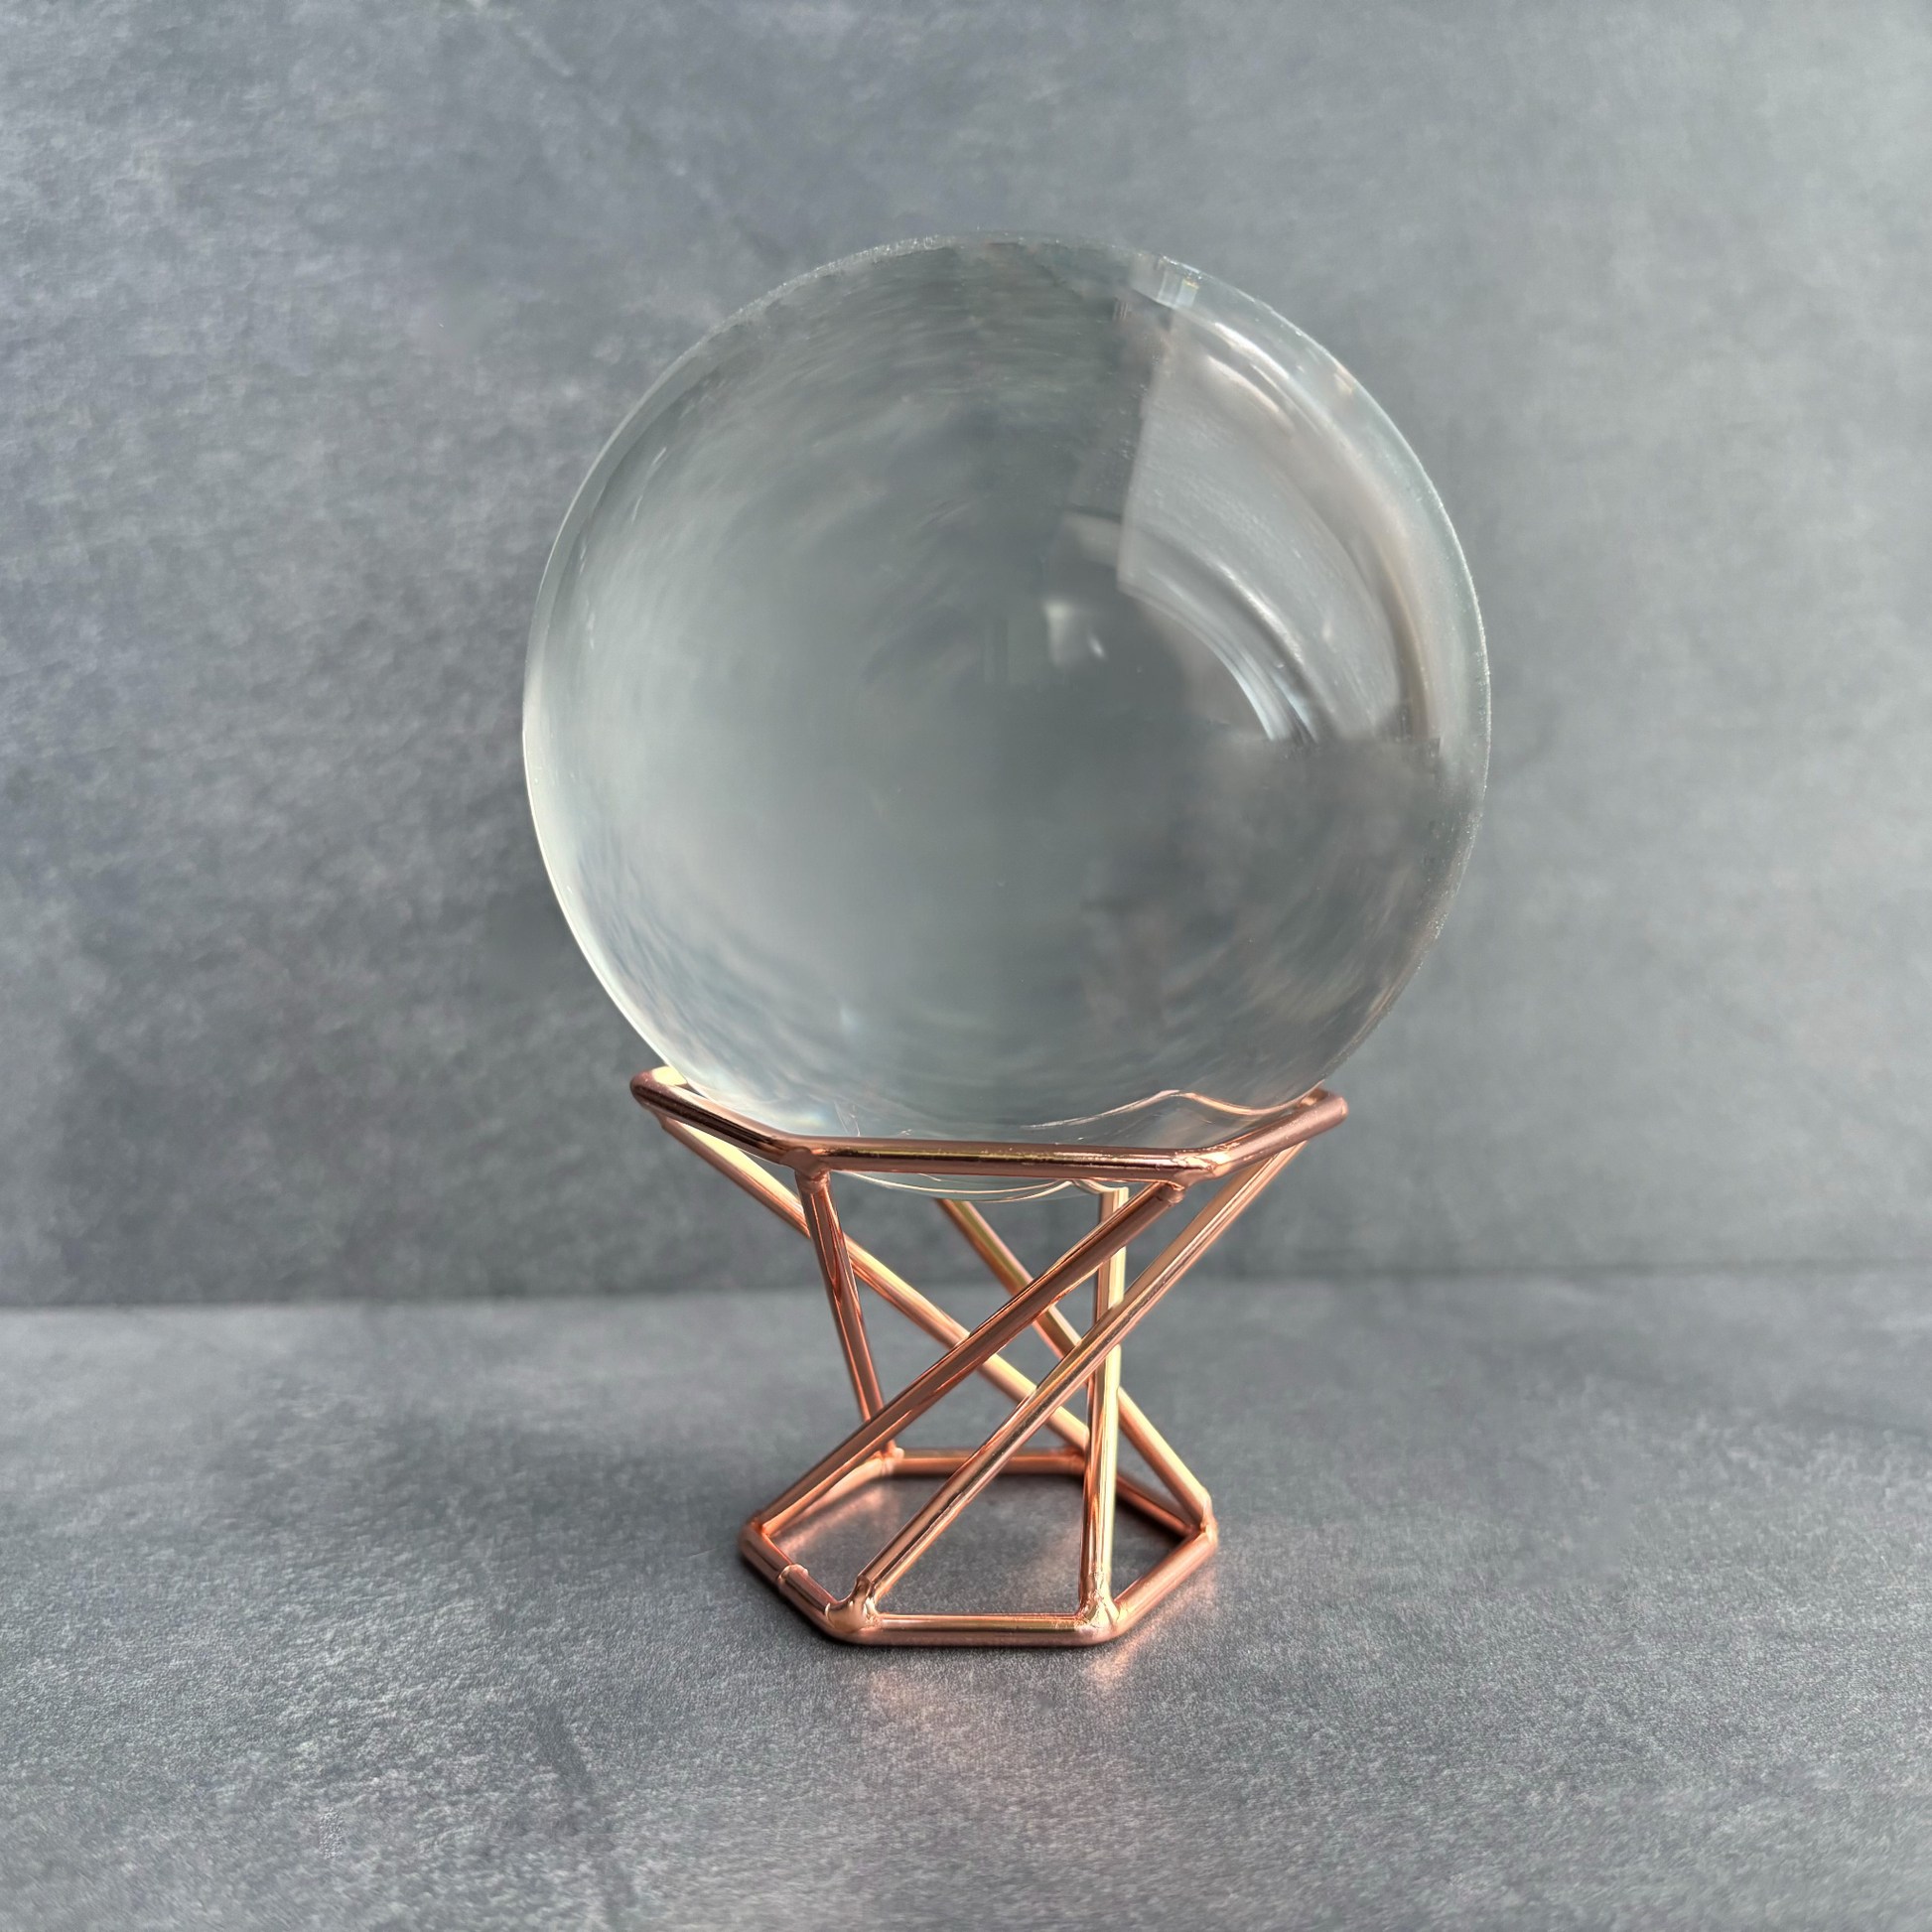 Rose Gold Metal Geometric Crystal Sphere Display Stand